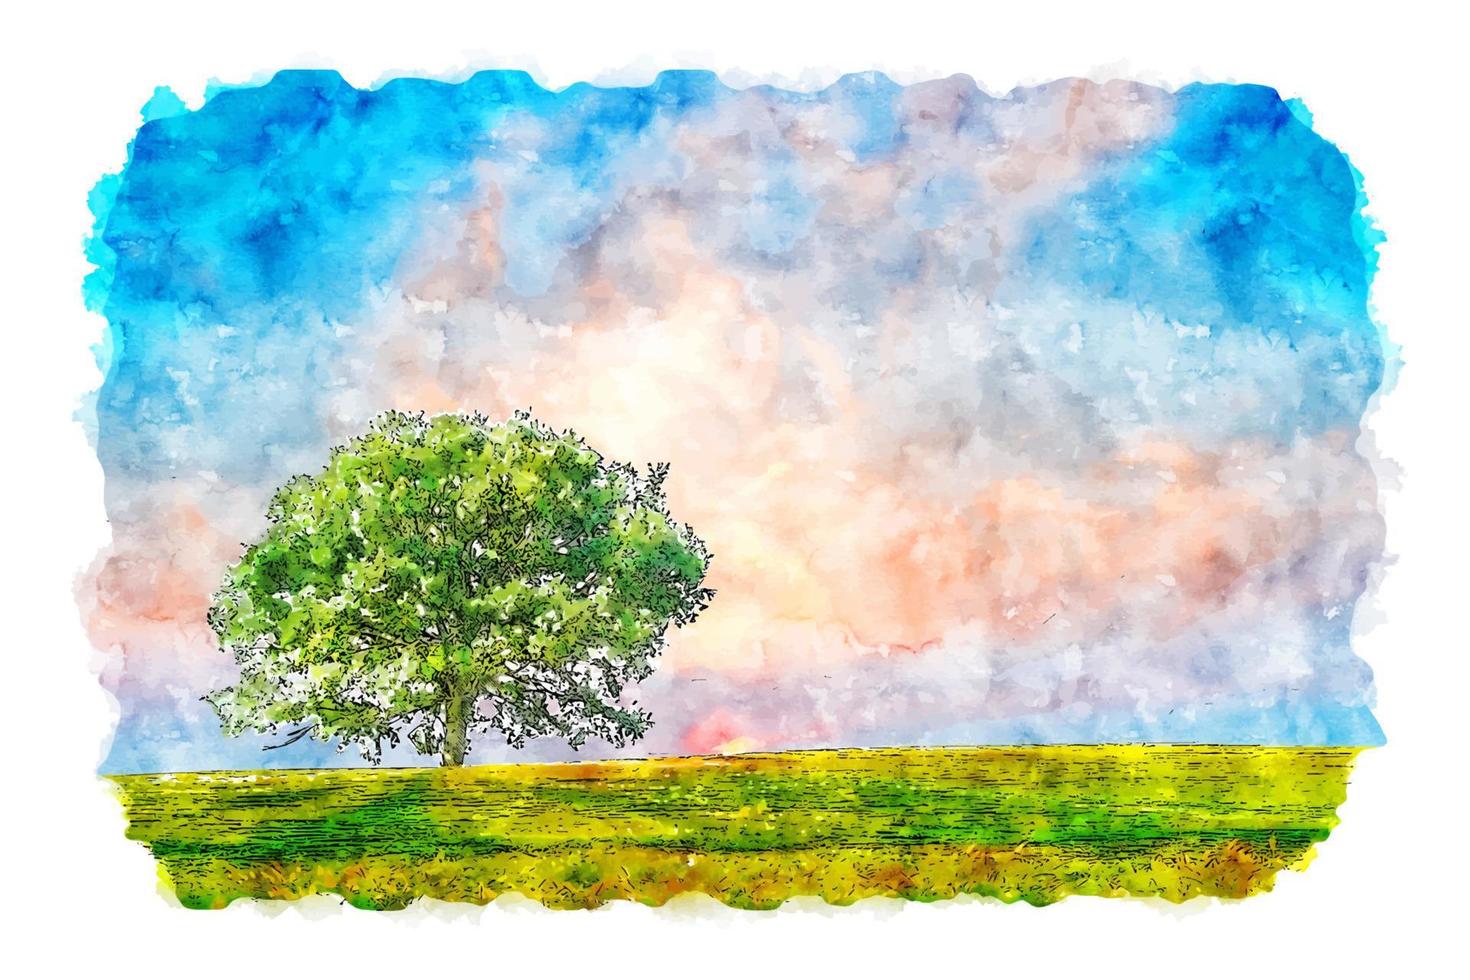 paisaje cielo árbol naturaleza acuarela bosquejo dibujado a mano ilustración vector